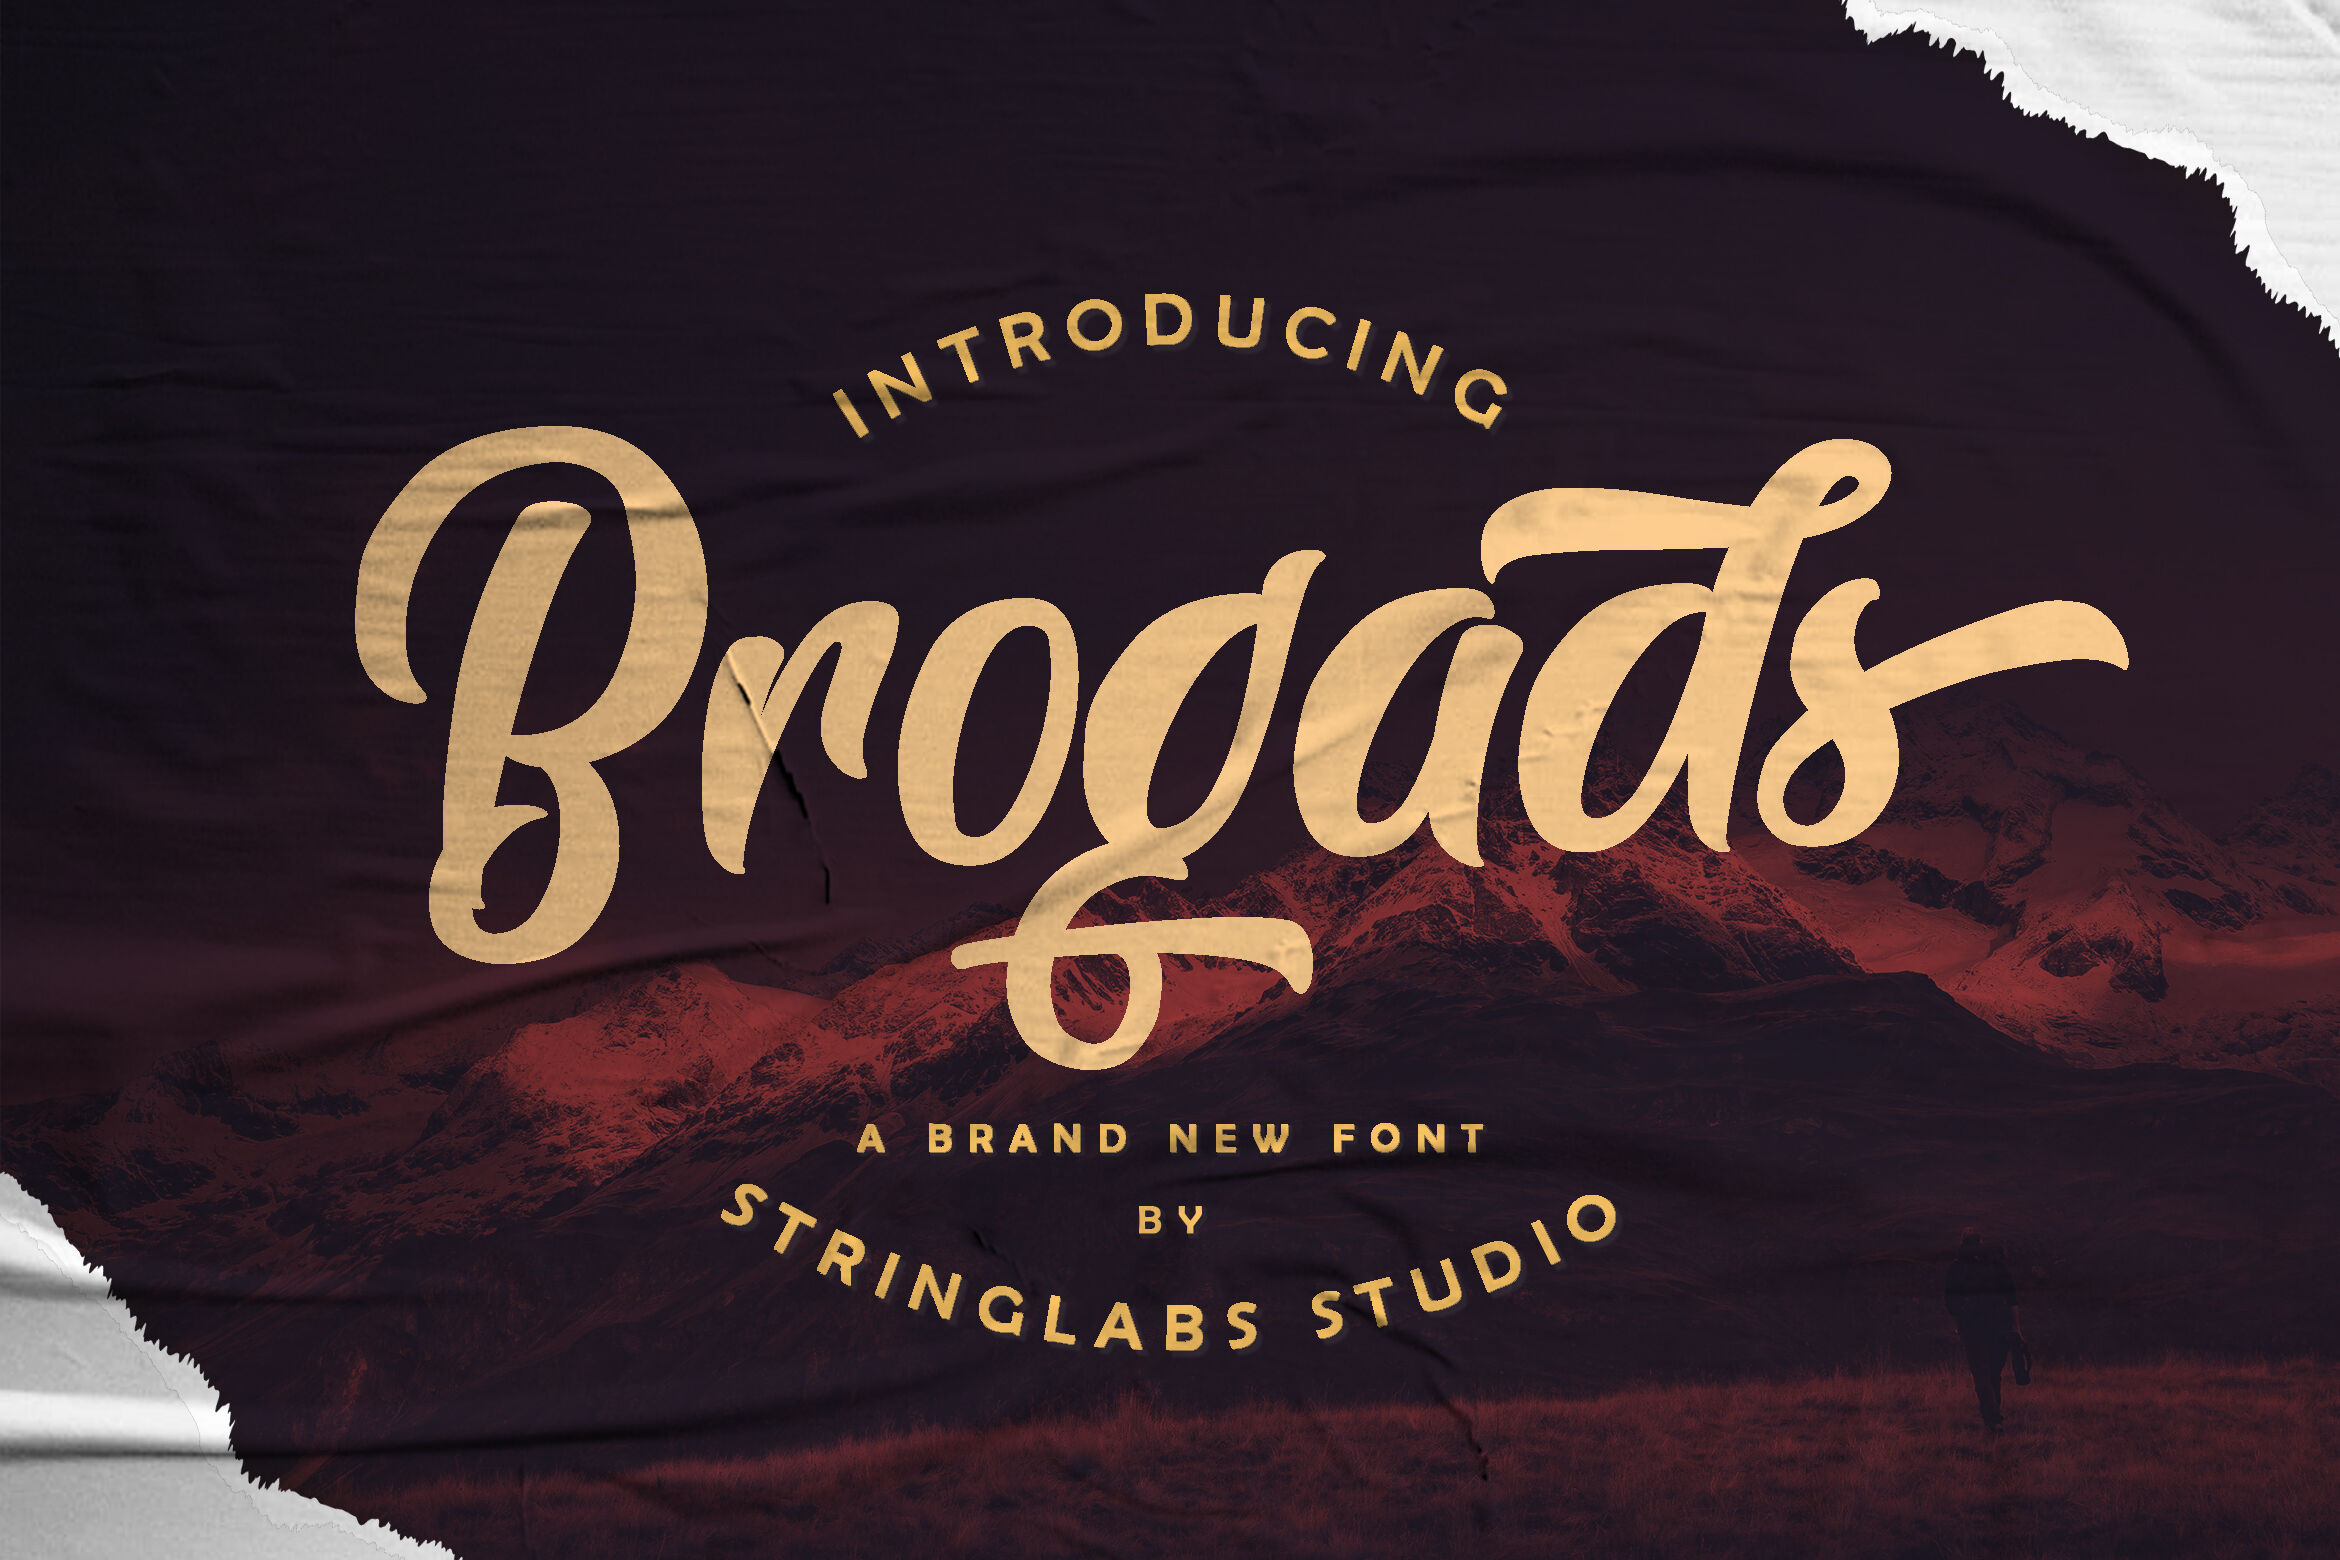 Brogads Bold Script Retro Font By Stringlabs Thehungryjpeg Com